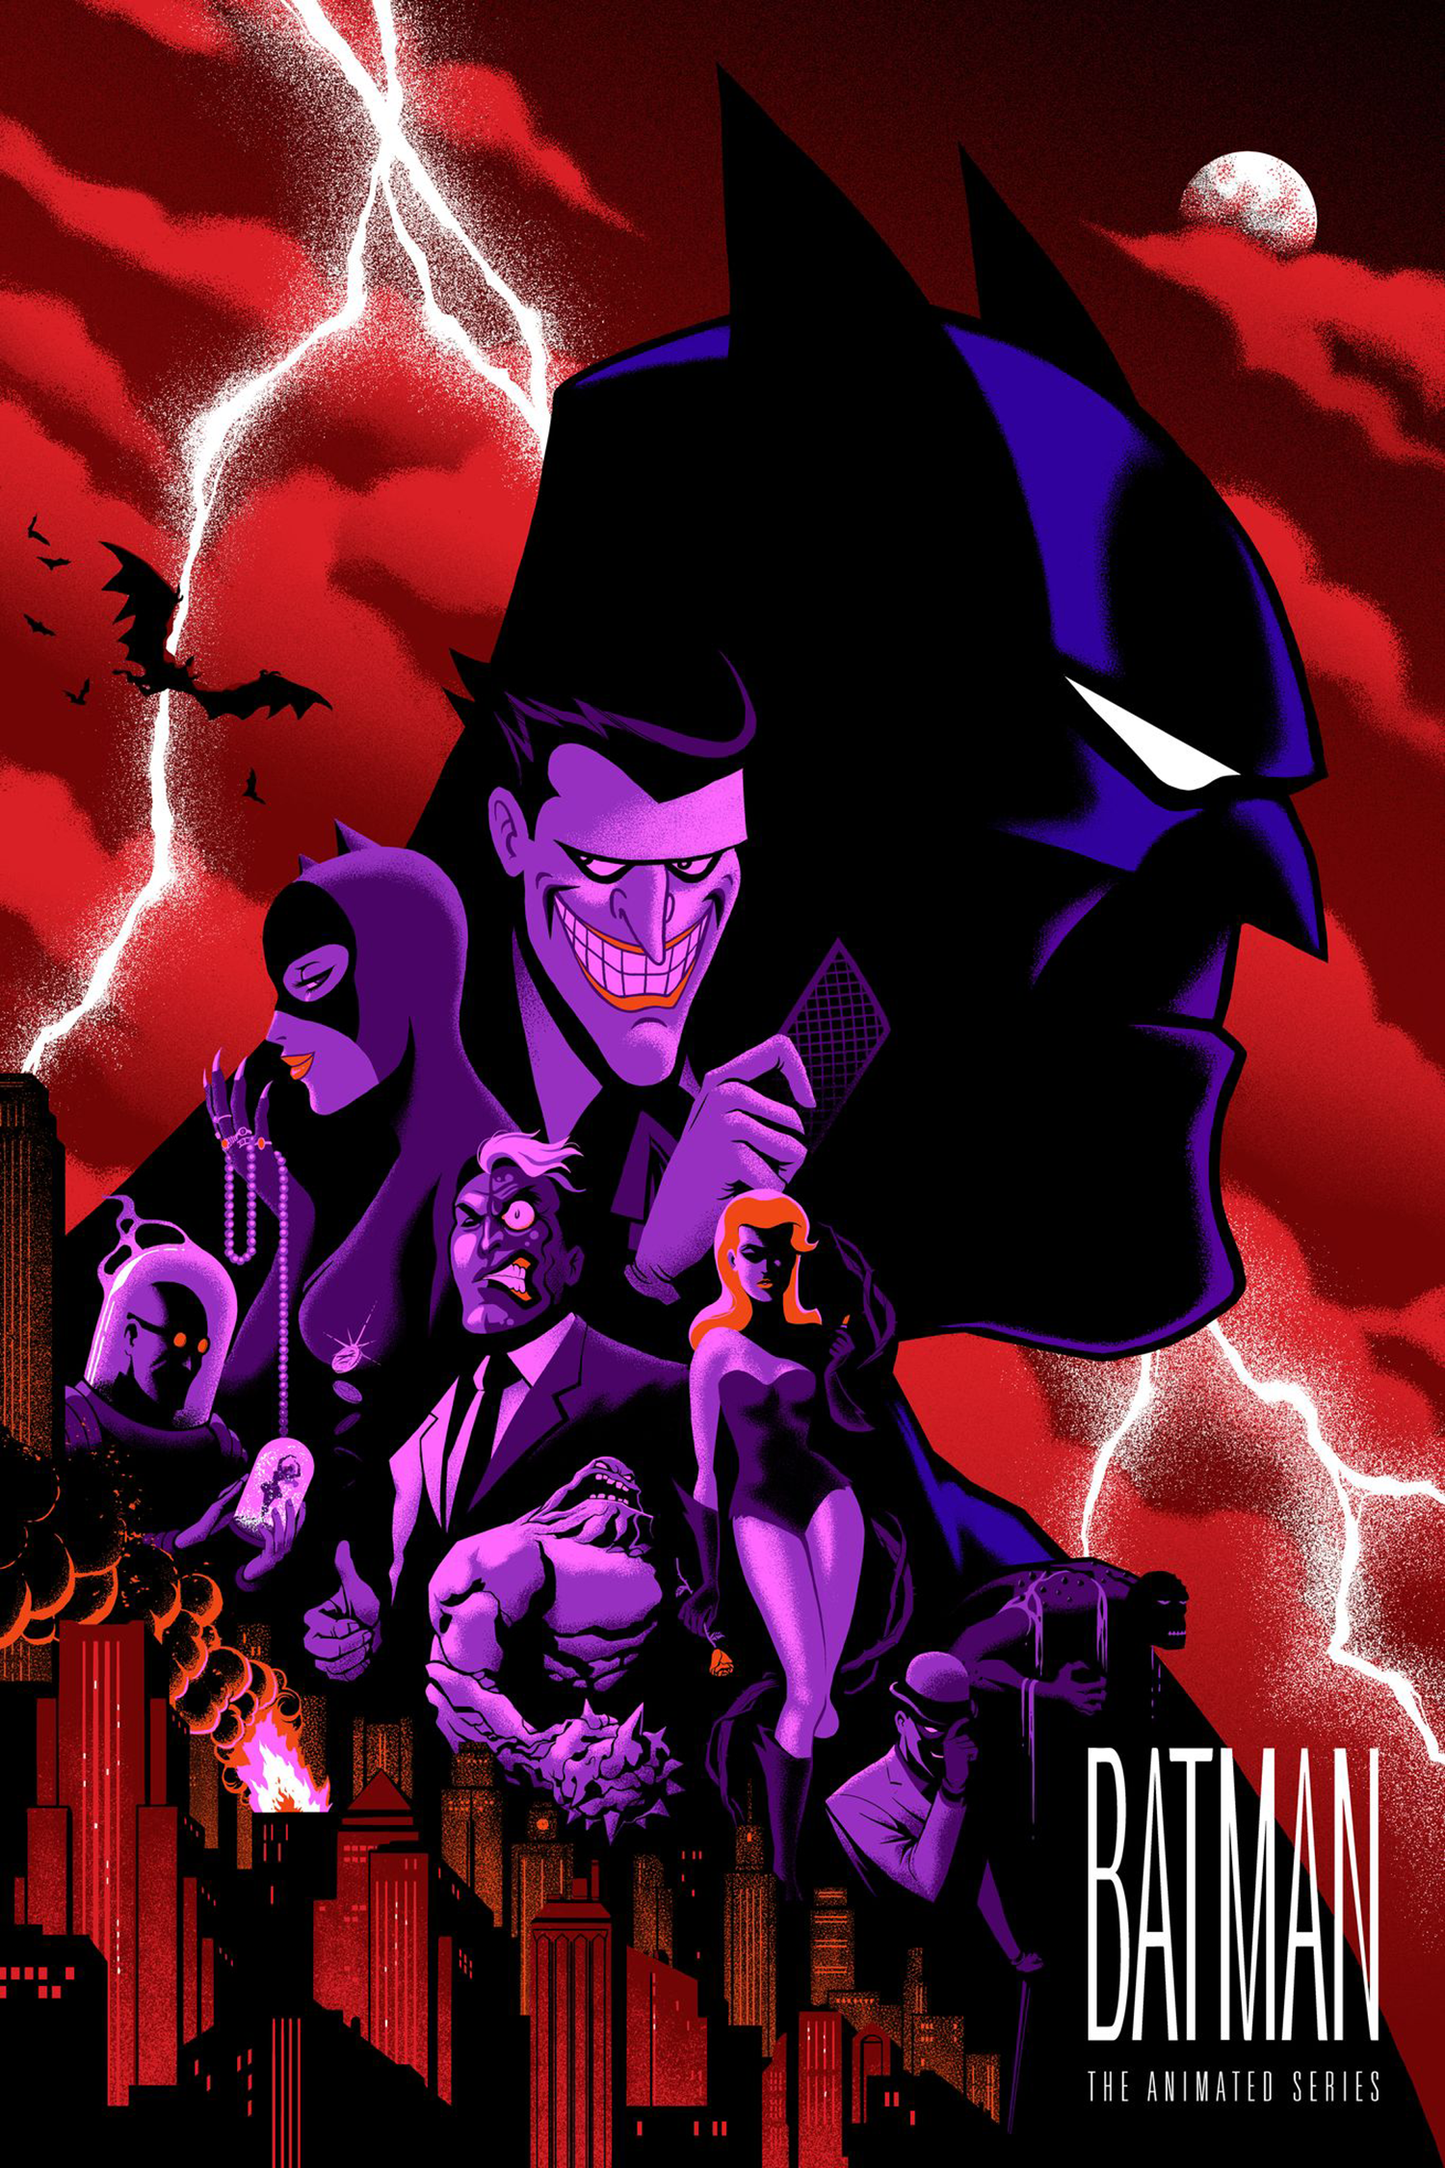 Kristin Miklos "Batman: The Animated Series"